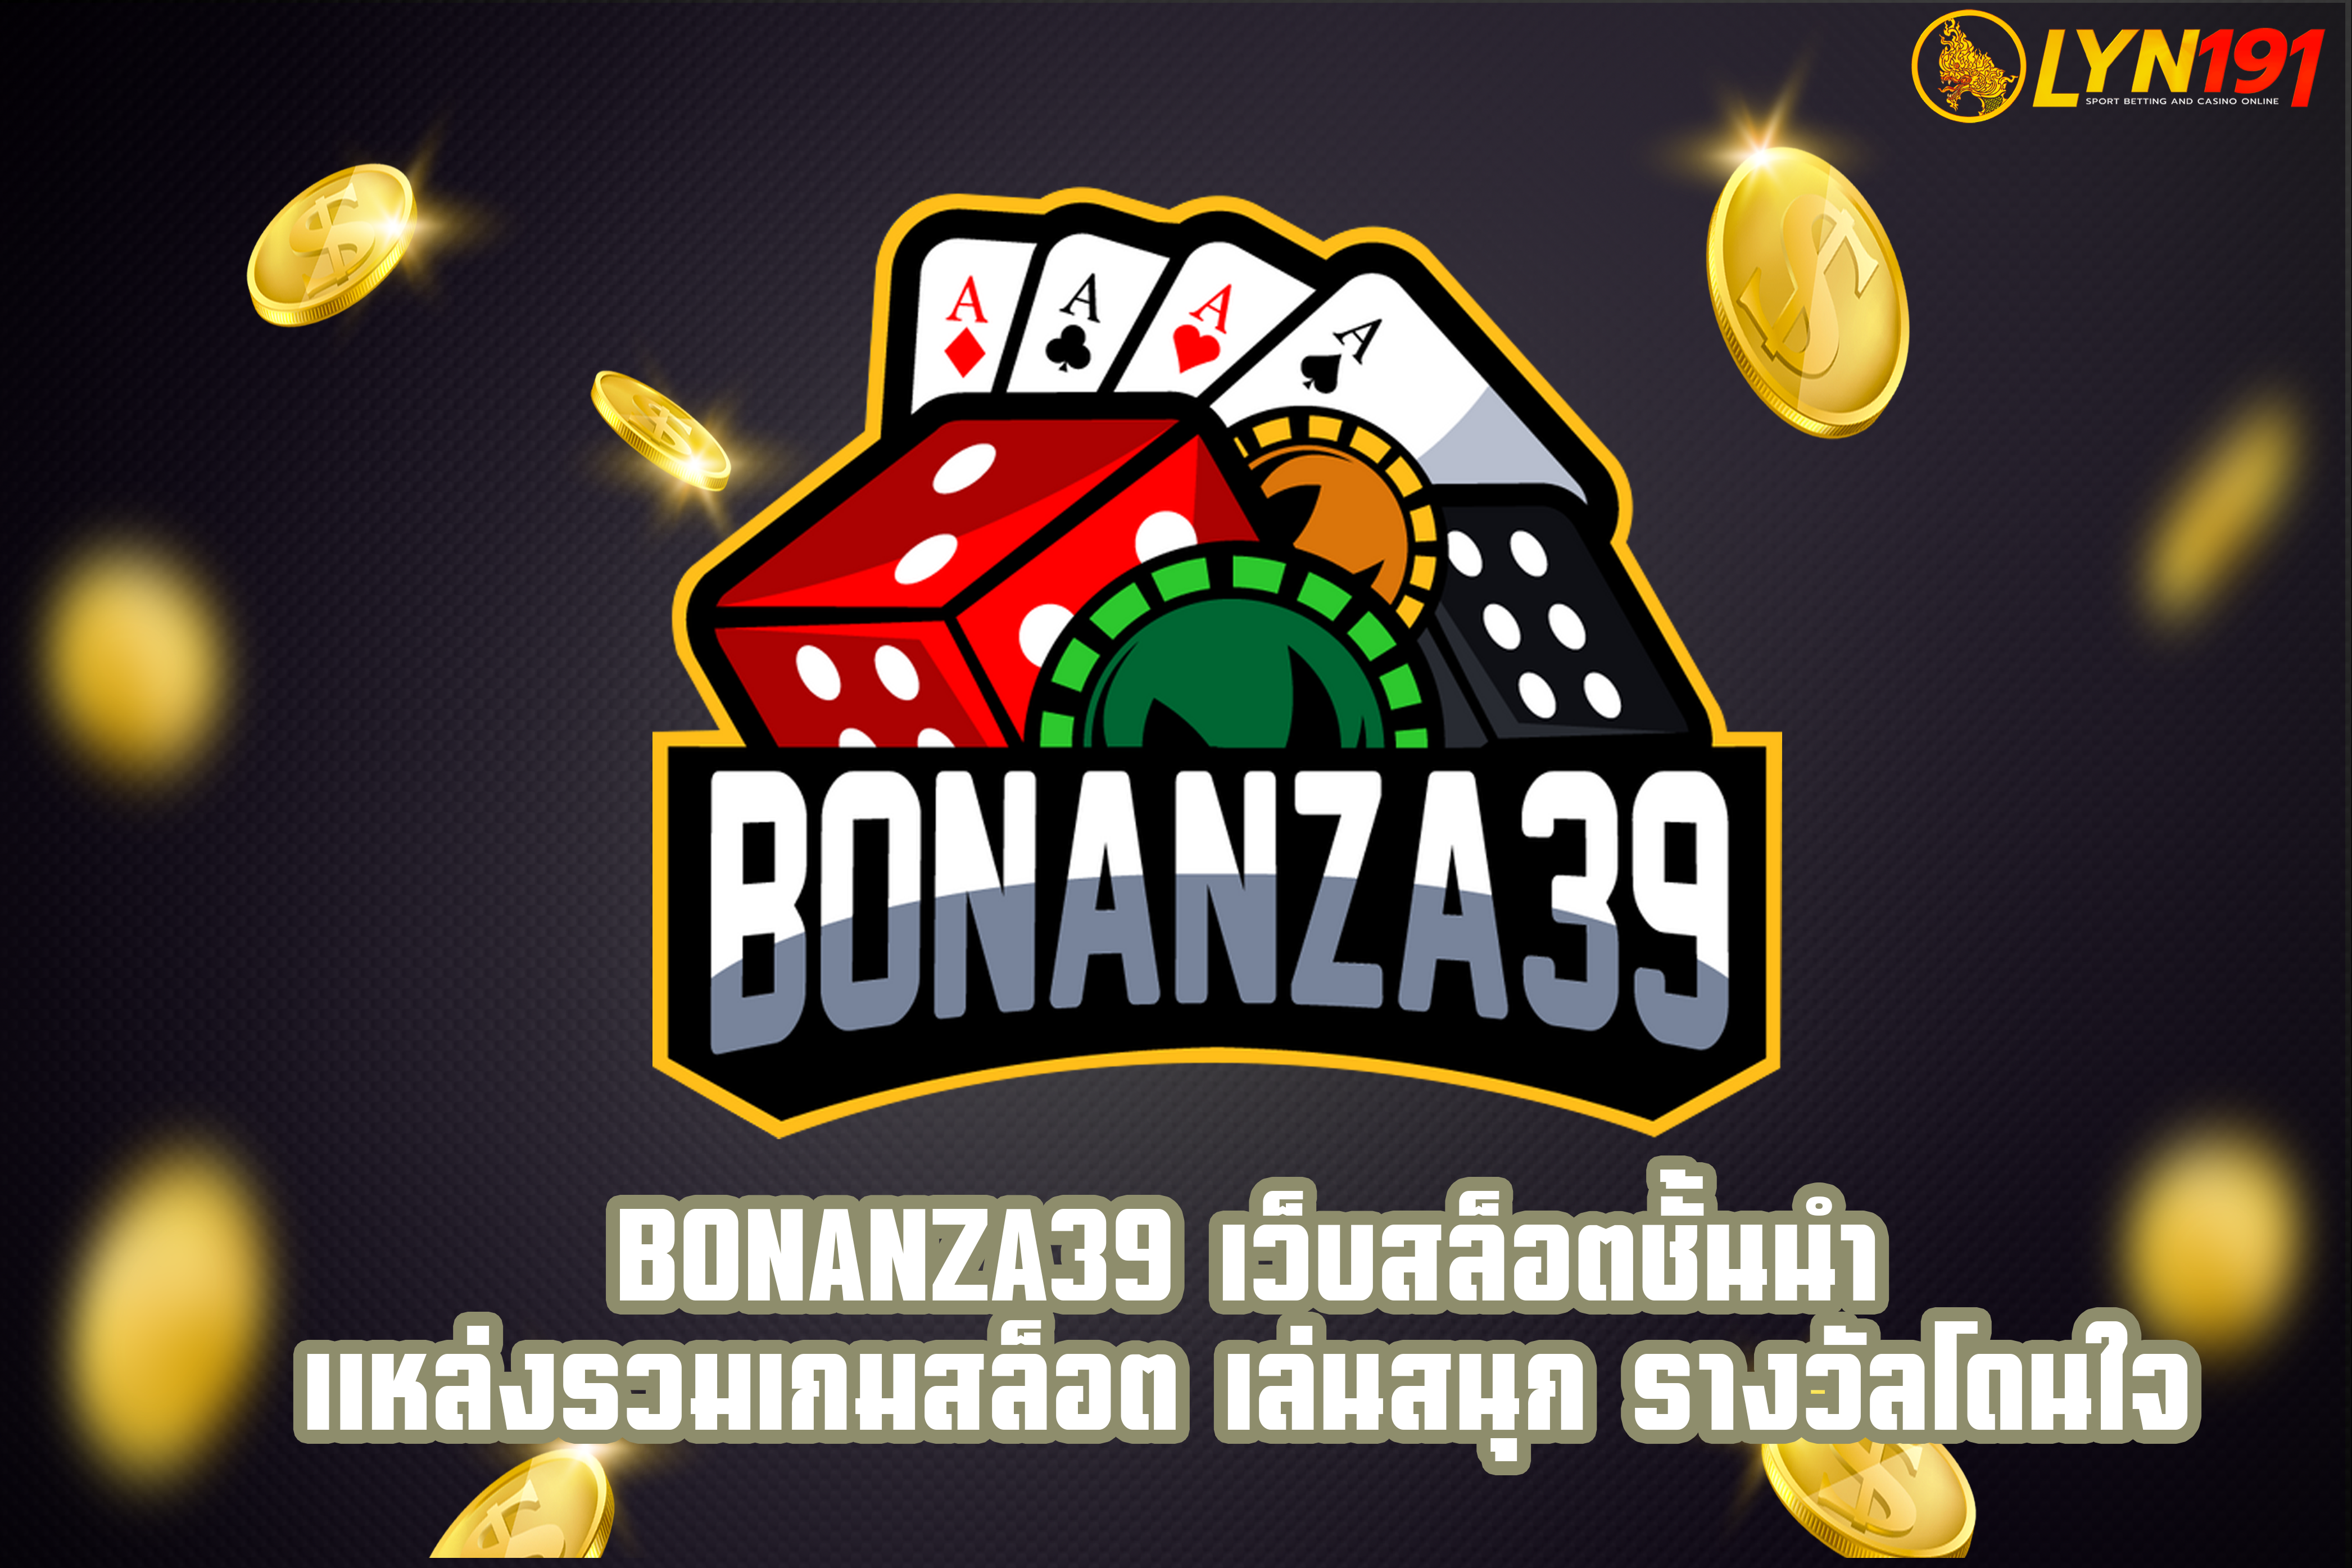 Bonanza39